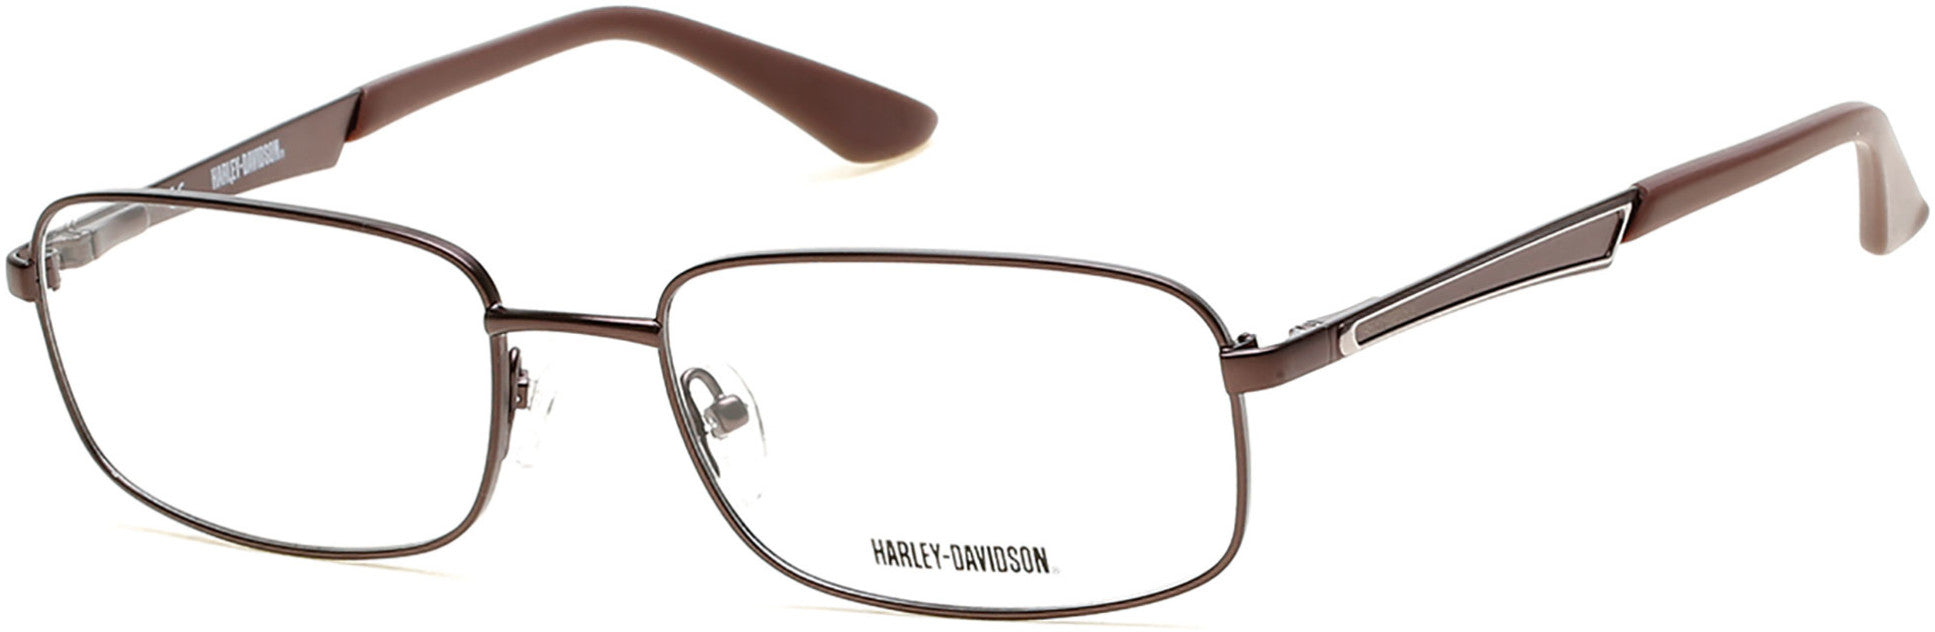 Harley-Davidson HD0728 Eyeglasses 049-049 - Matte Dark Brown